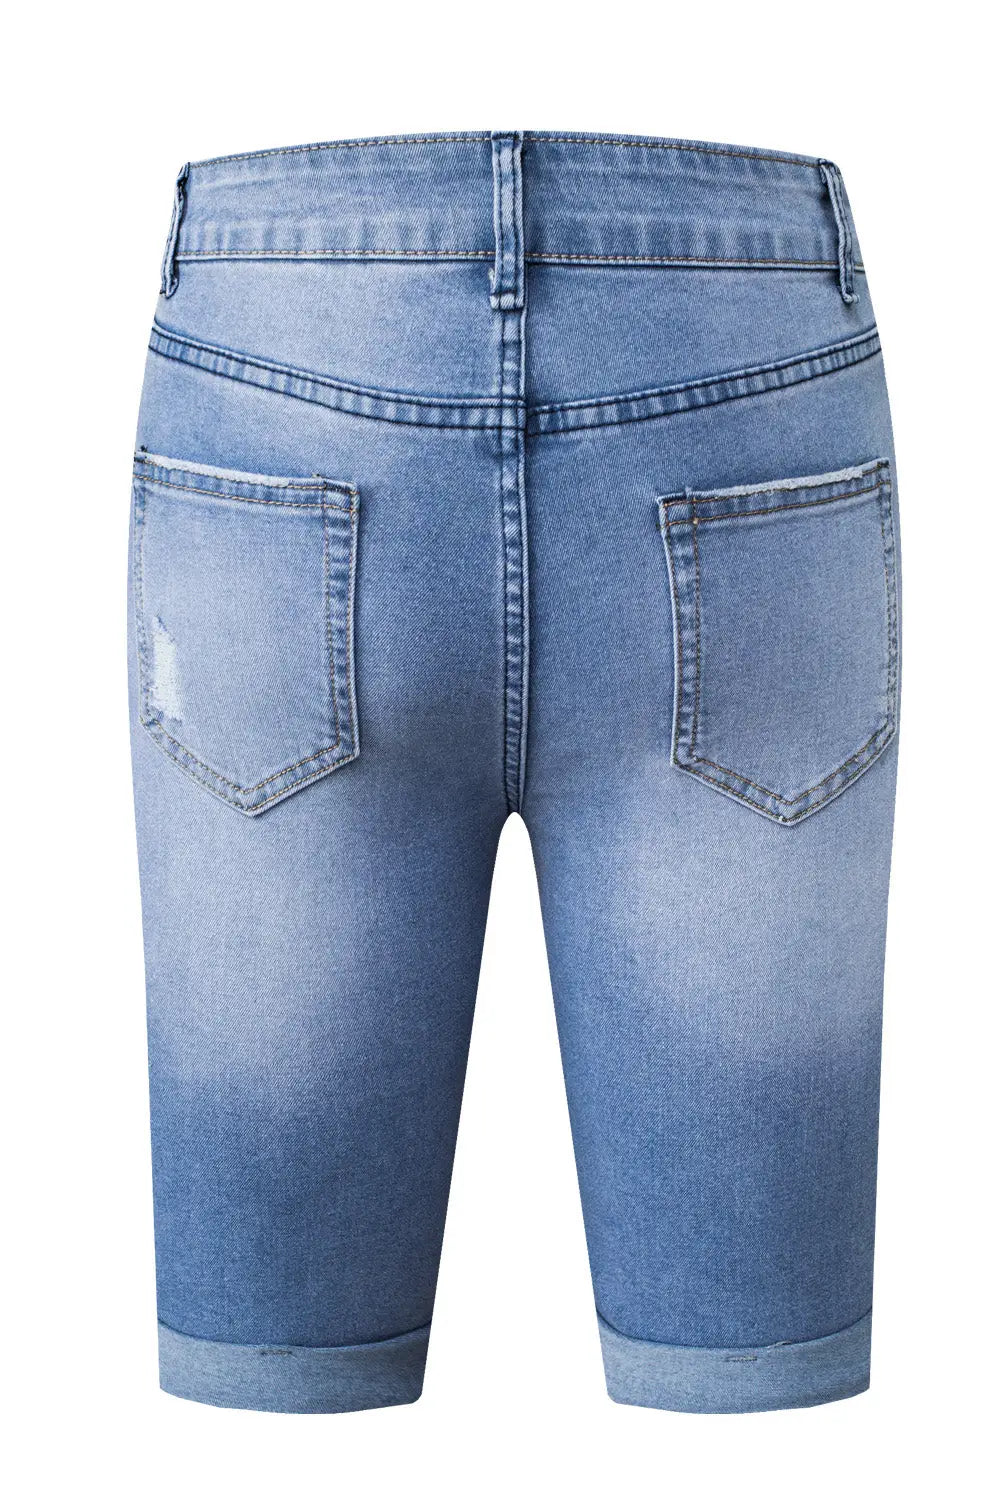 Sky Blue Acid Wash Roll-up Edge Bermuda Short Jeans-24